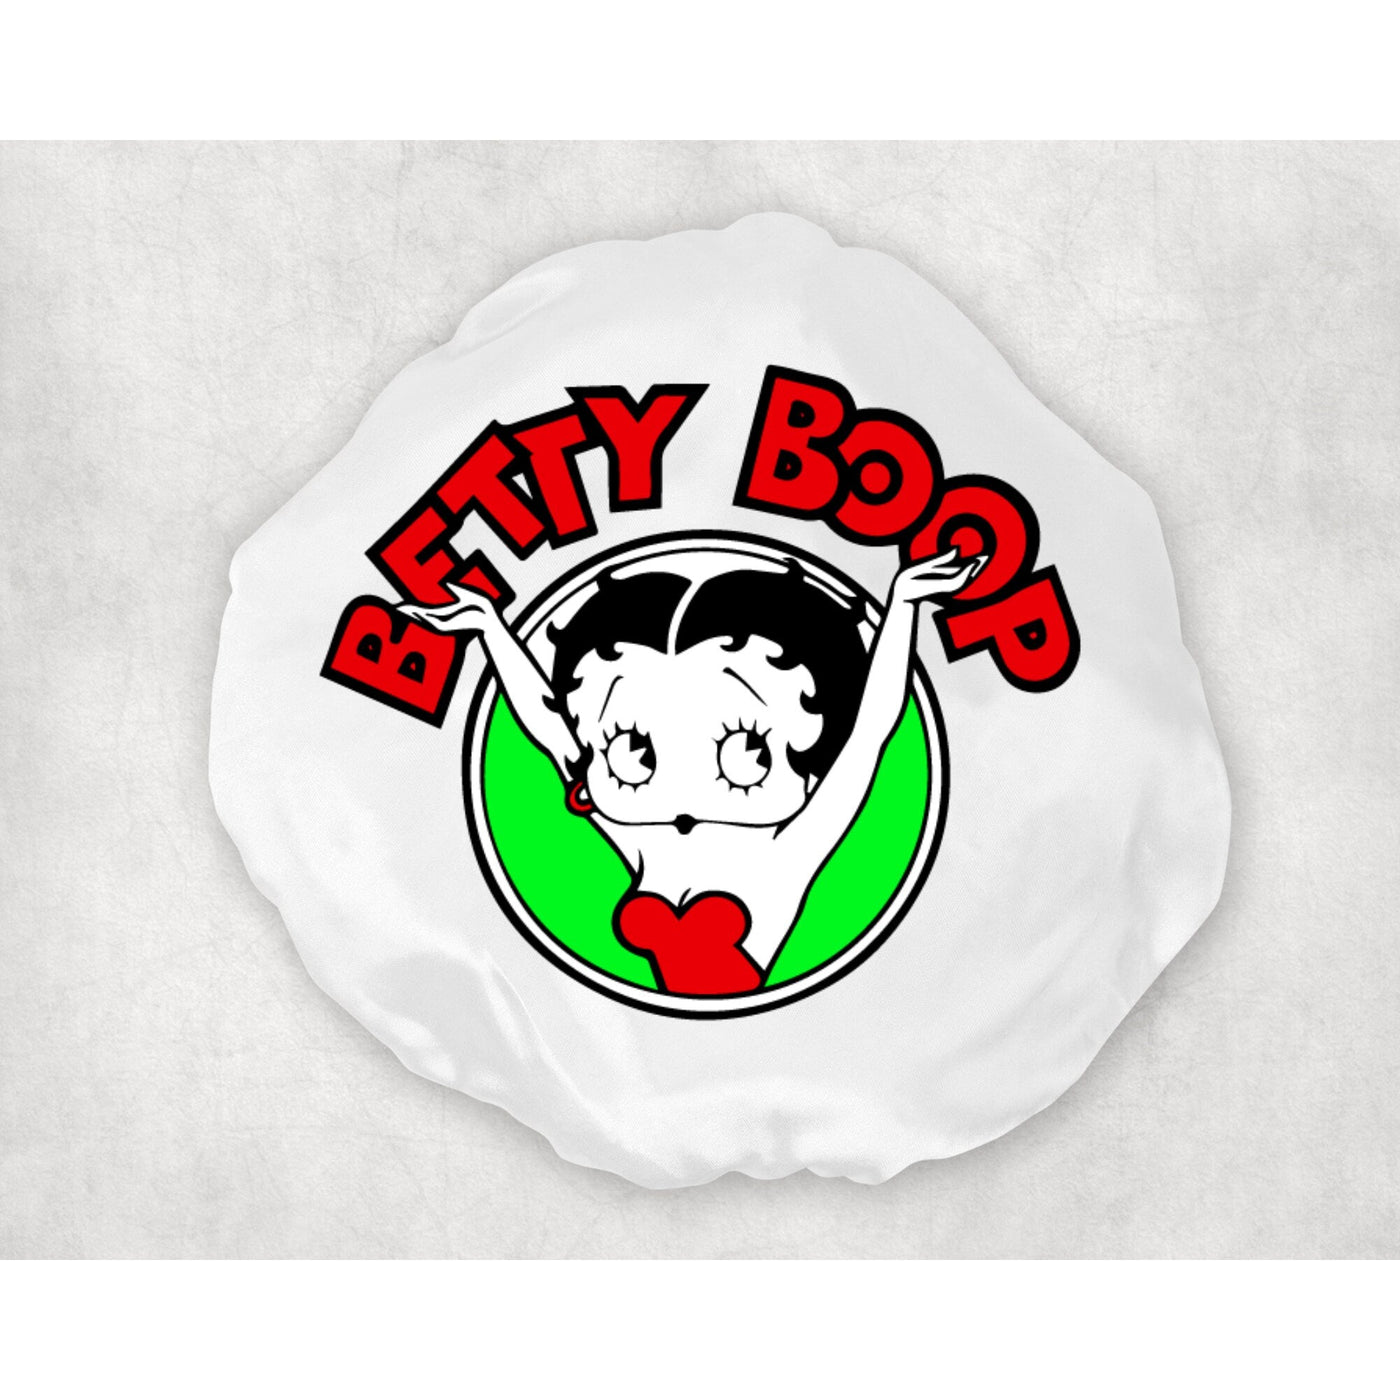 Personalize Betty Boop Satin Hair Bonnet - silk bonnet for long hair- hair bonnet for sleeping  - women's bonnet- bonnets for braids